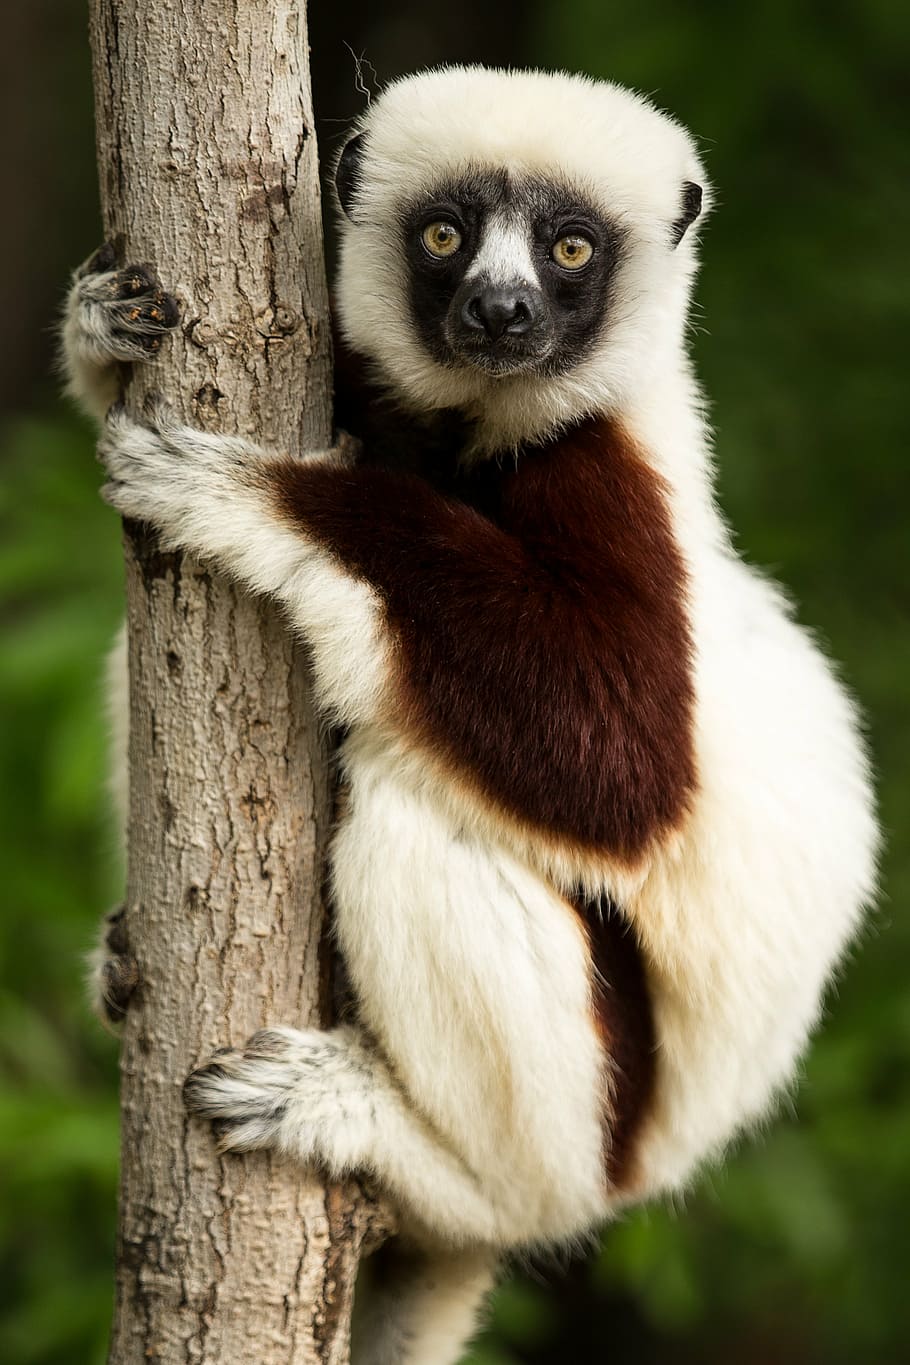 hewan, memegang, batang pohon, lemur, sifaka coquerel, sifaka, madagaskar, propitheus, duke lemur pusat, durham